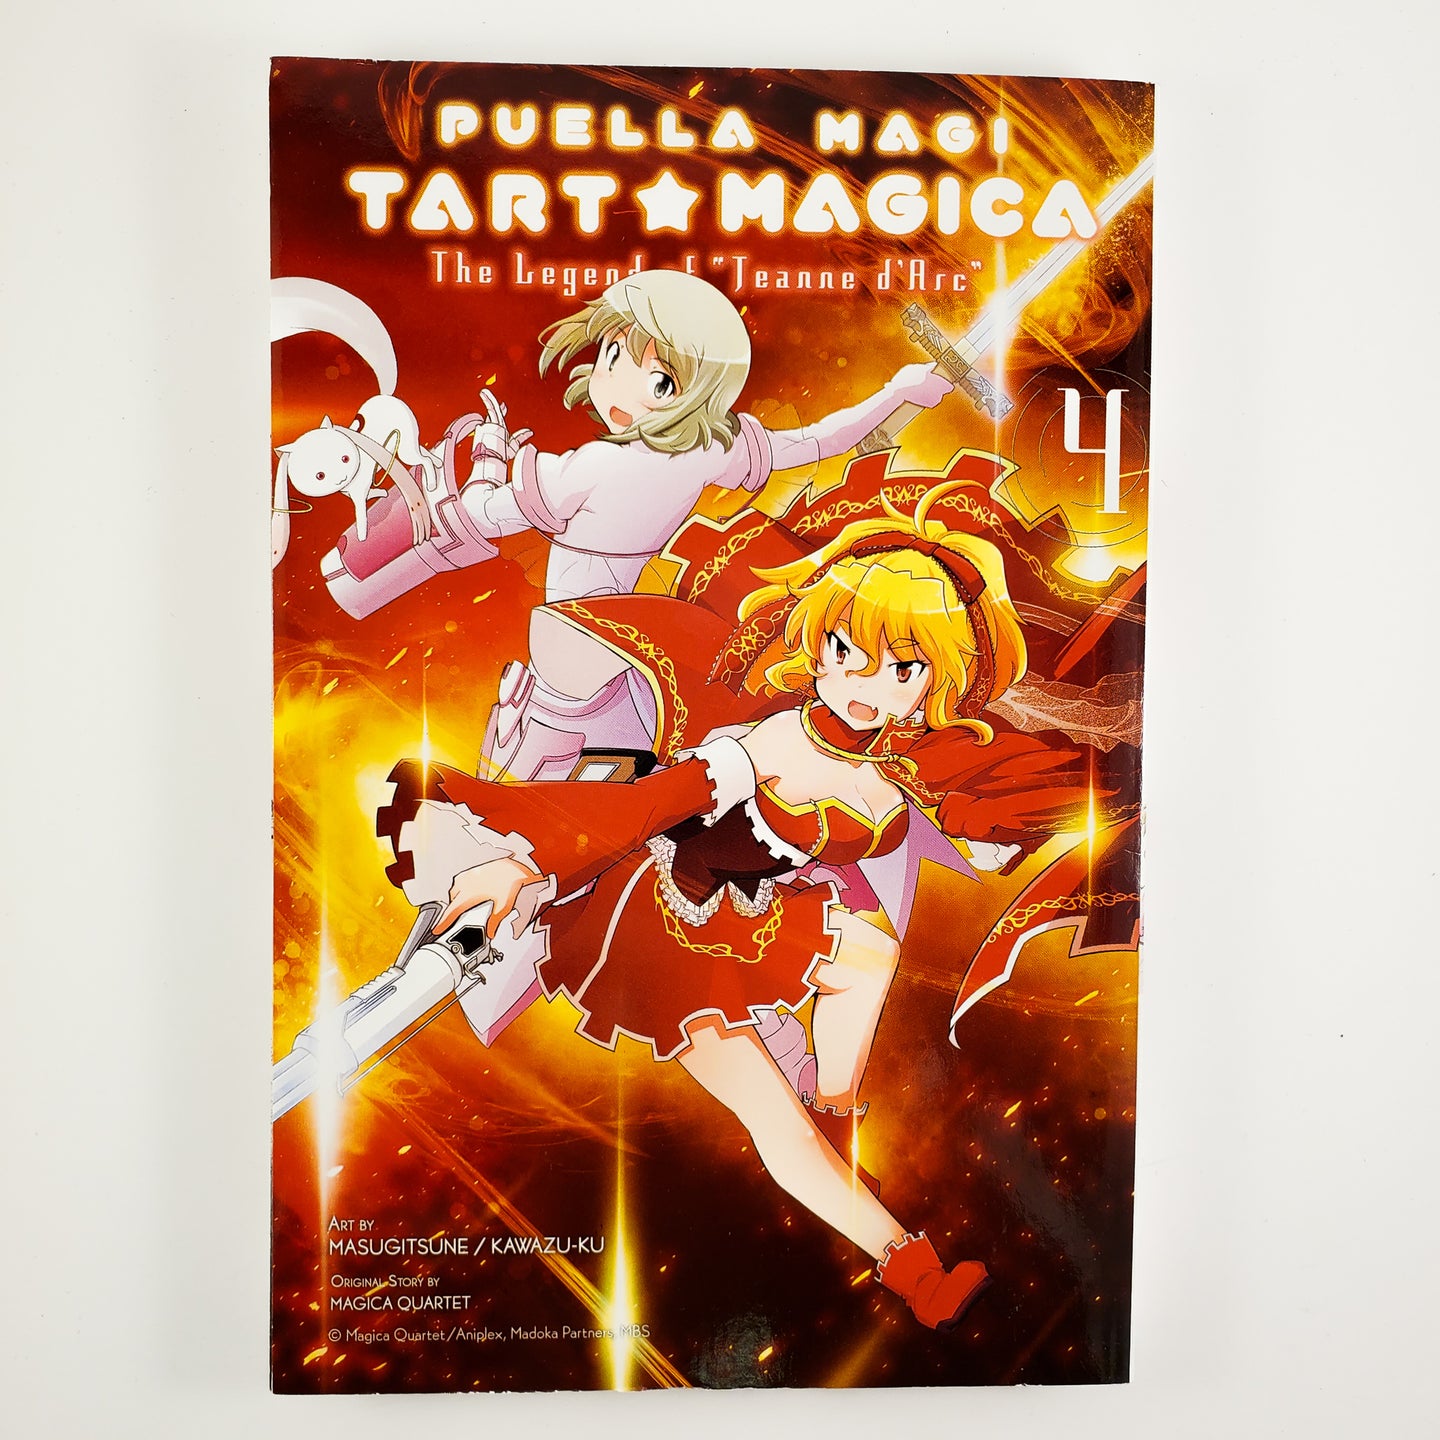 Puella Magi Tart Magica: The Legend of Jeanne d'Arc Volume 4. Manga by Masugitsune / Kawazuku and Magic Quartet.